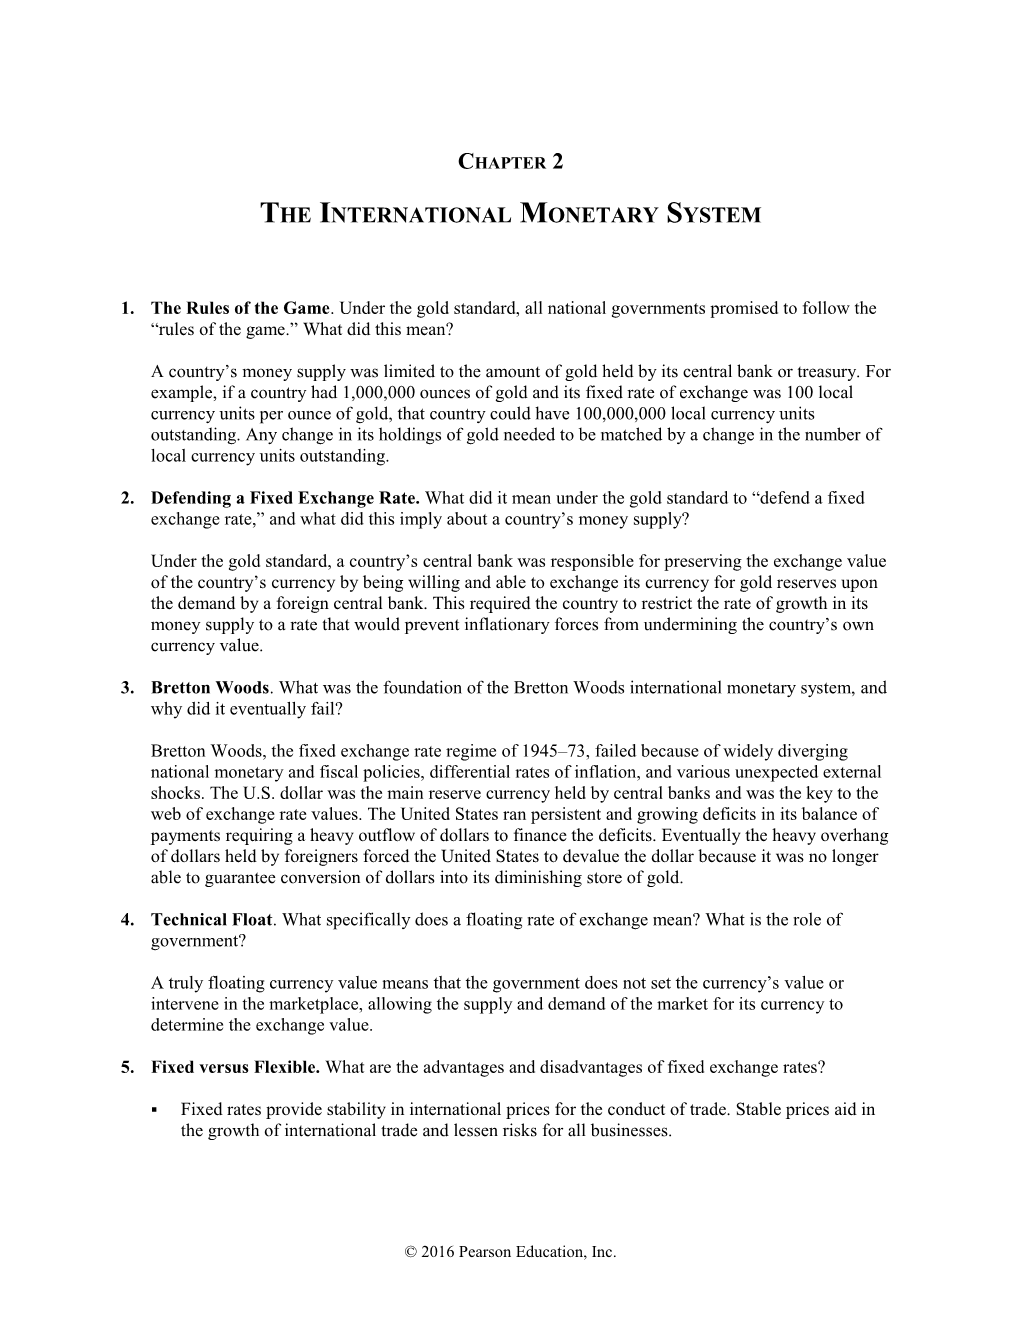 Chapter 2The International Monetary System 1